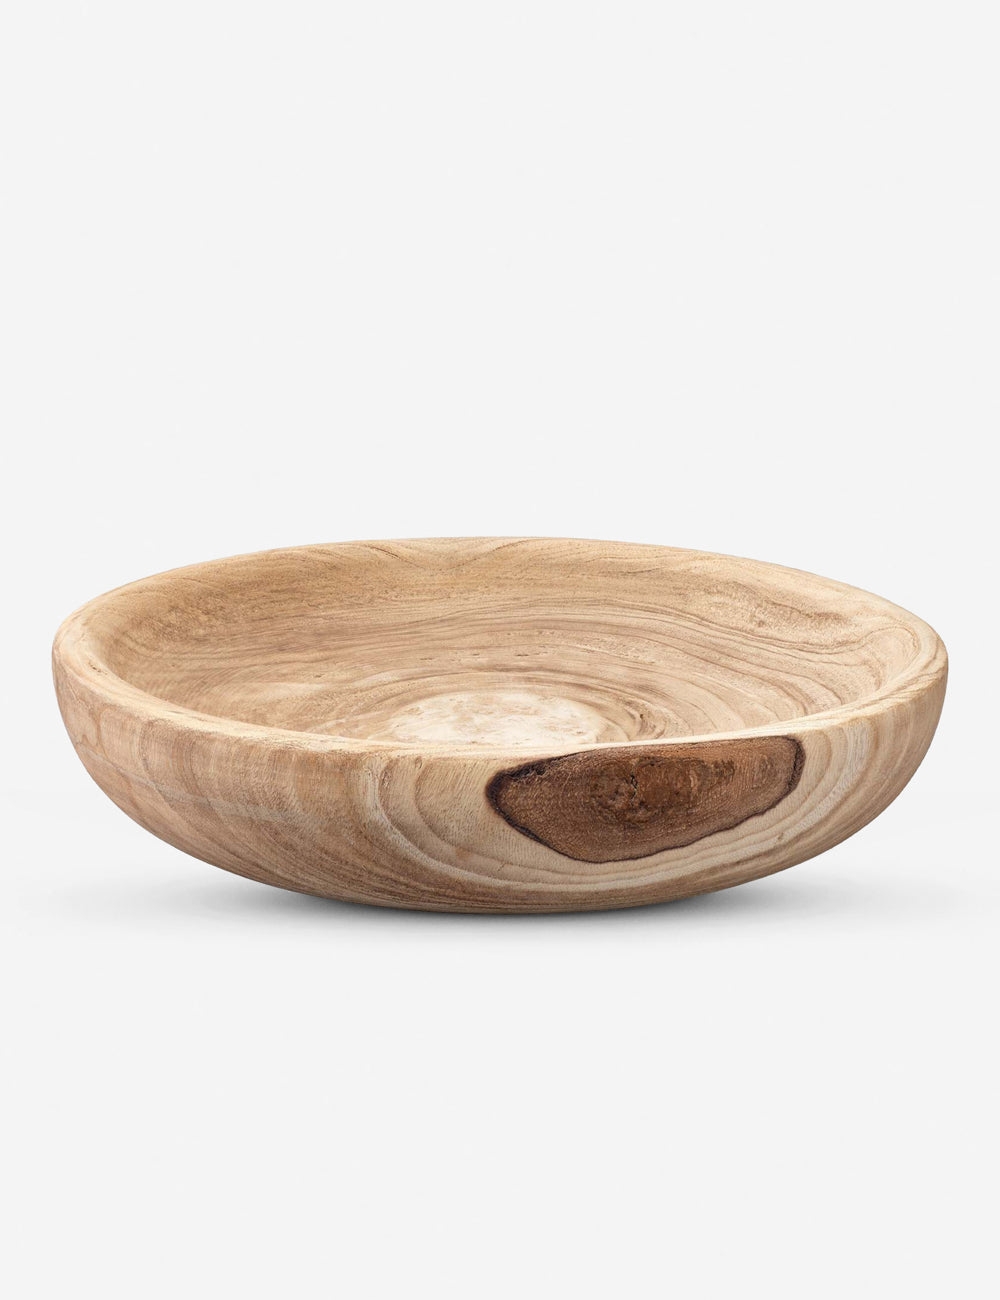 Sada Wooden Bowl - Image 2